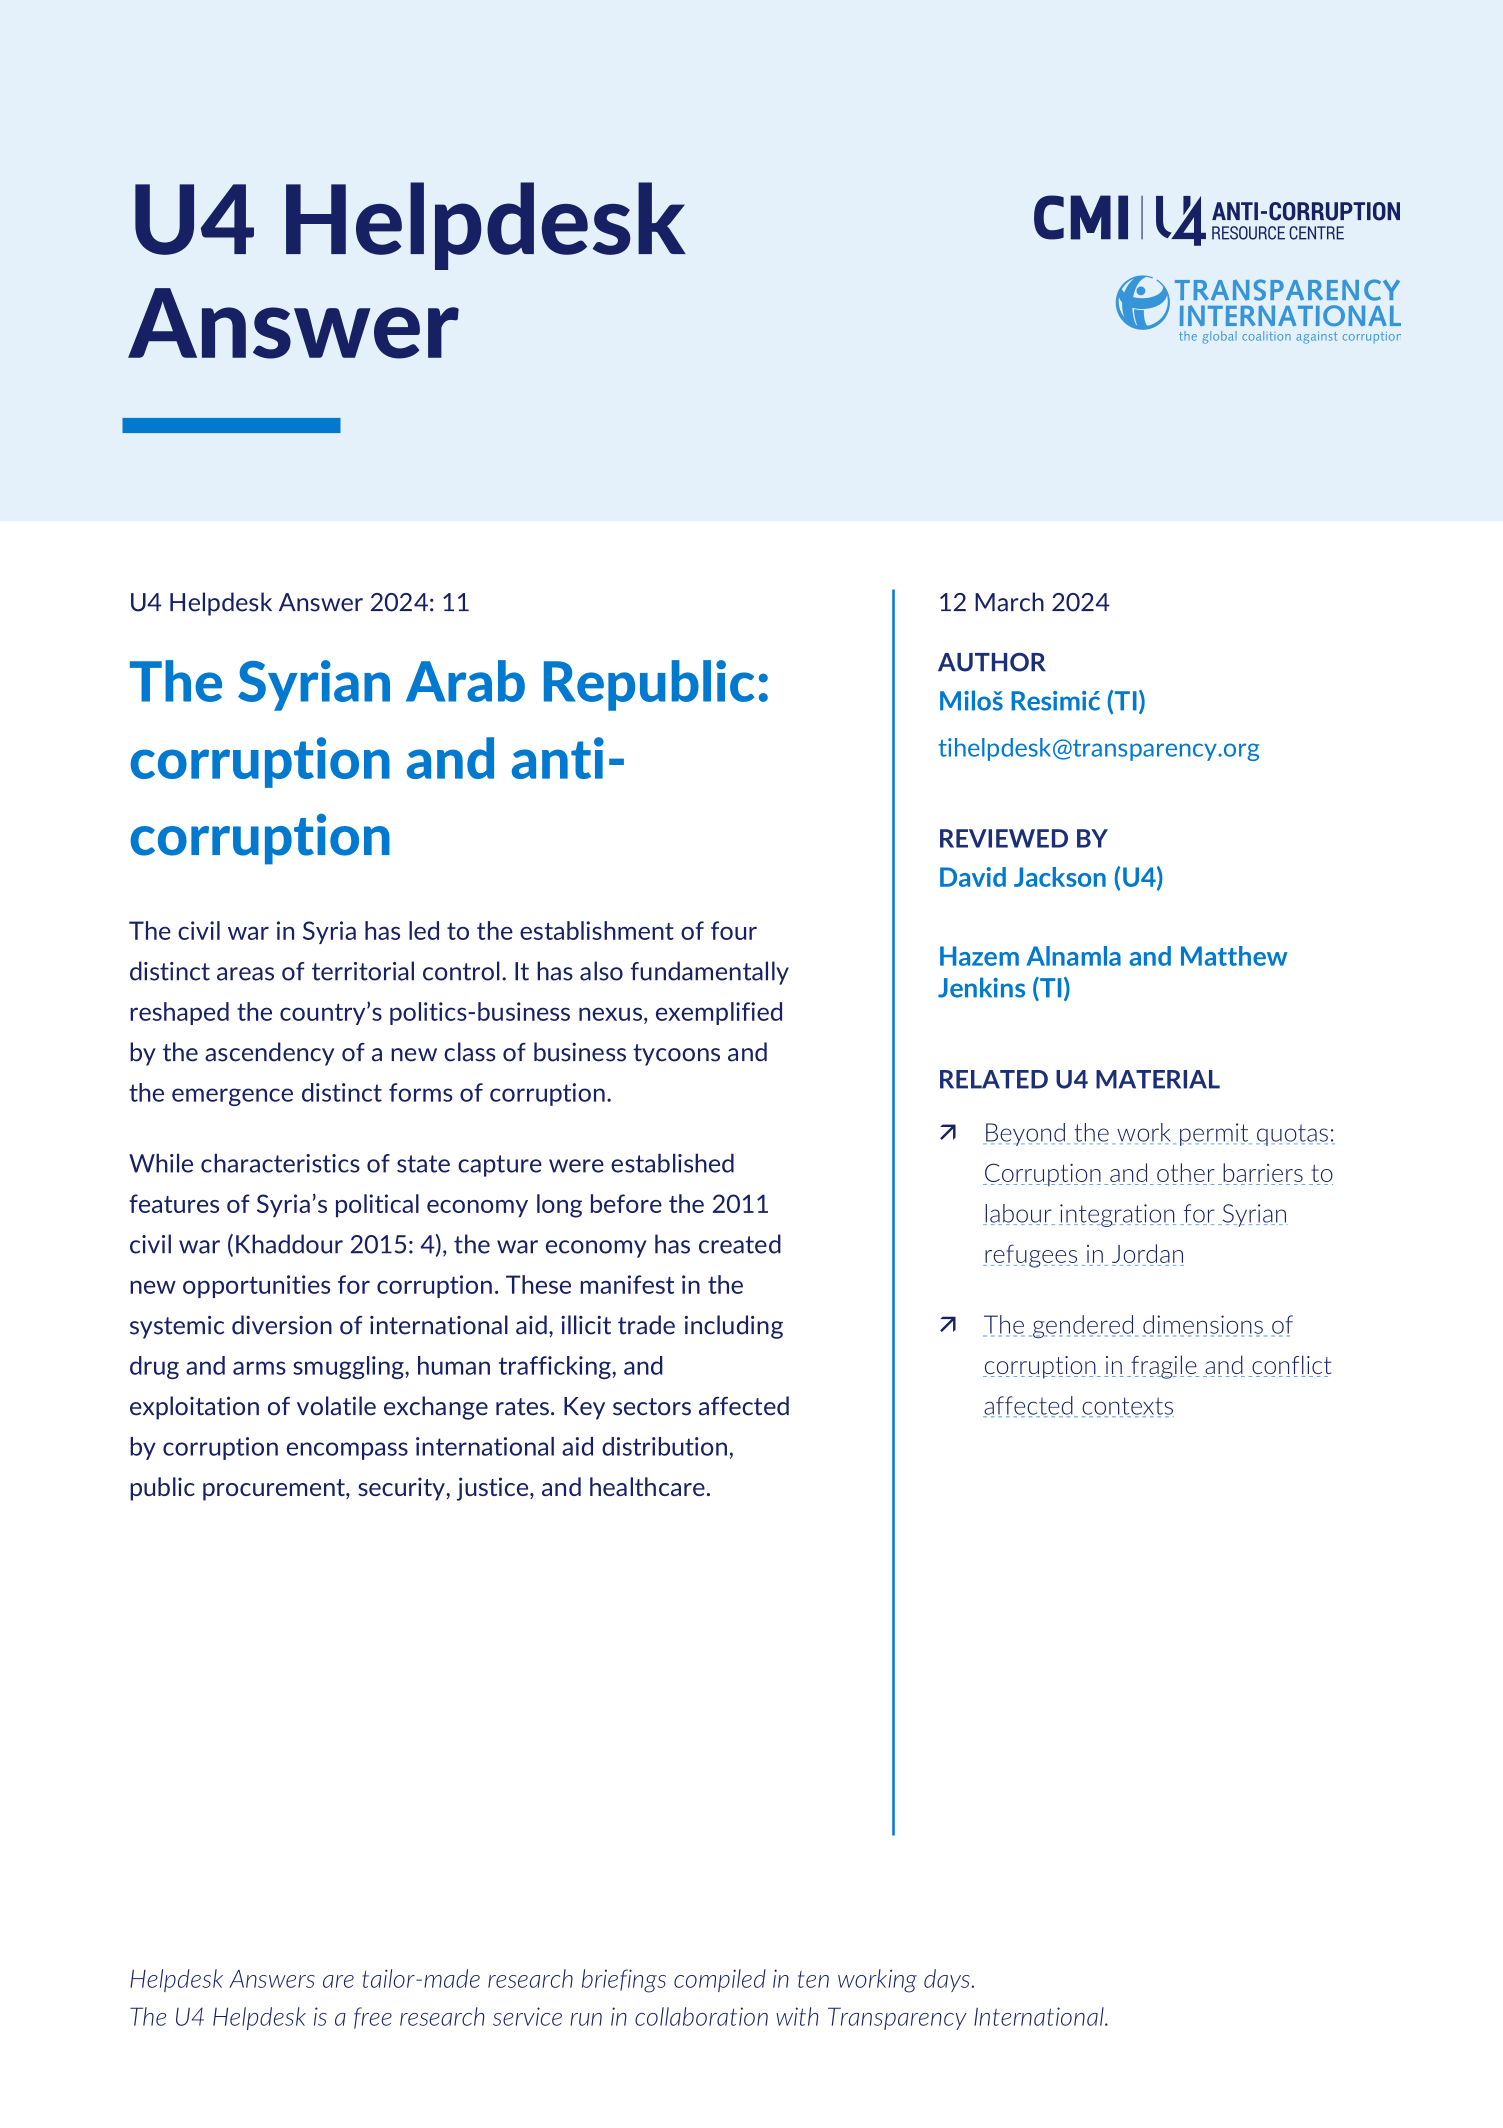 The Syrian Arab Republic: corruption and anti-corruption